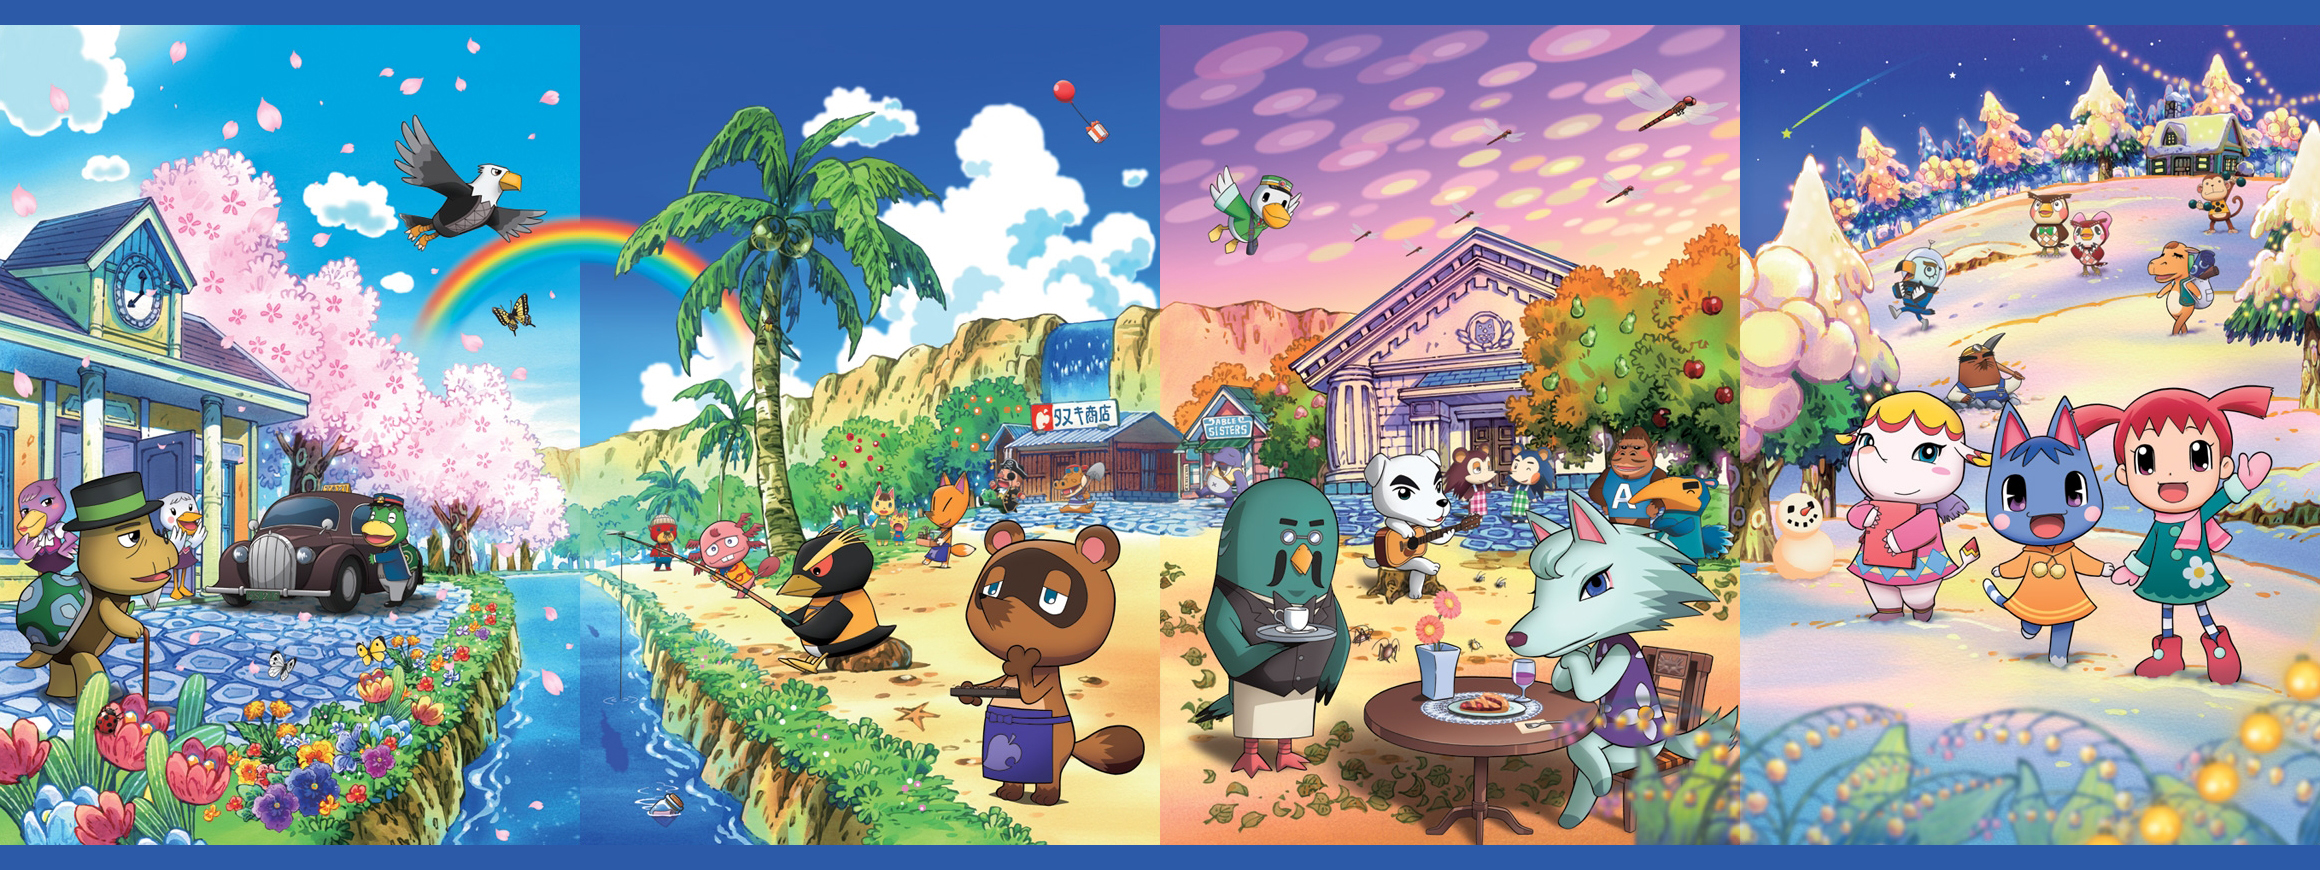 50+ Animal Crossing Wallpapers on WallpaperSafari